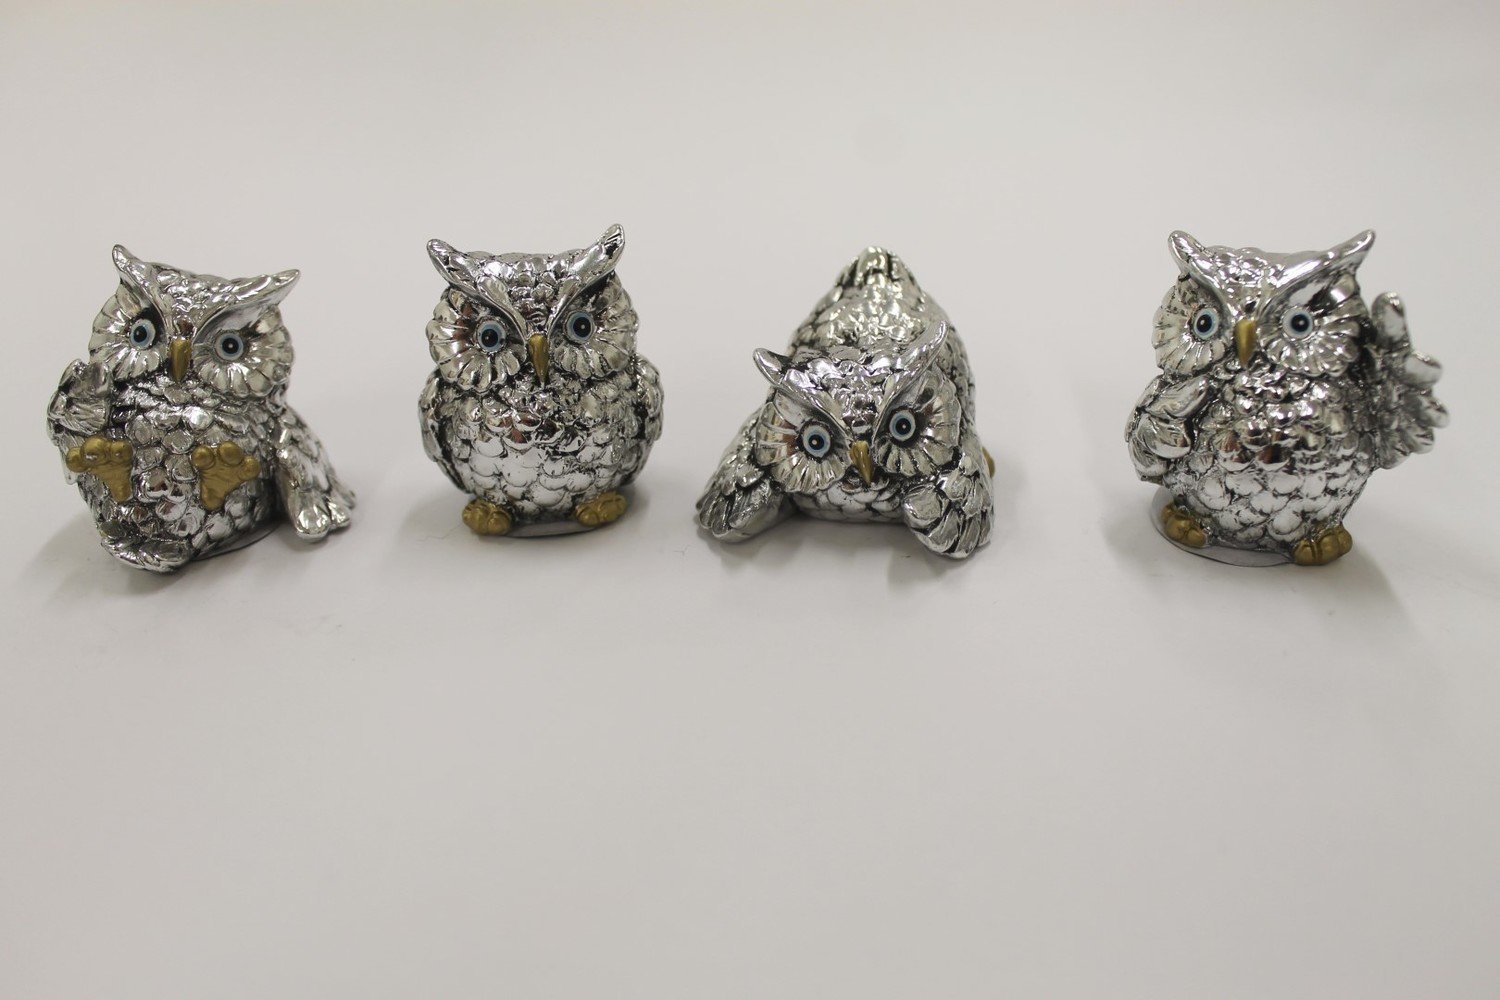 A set of four little Owls